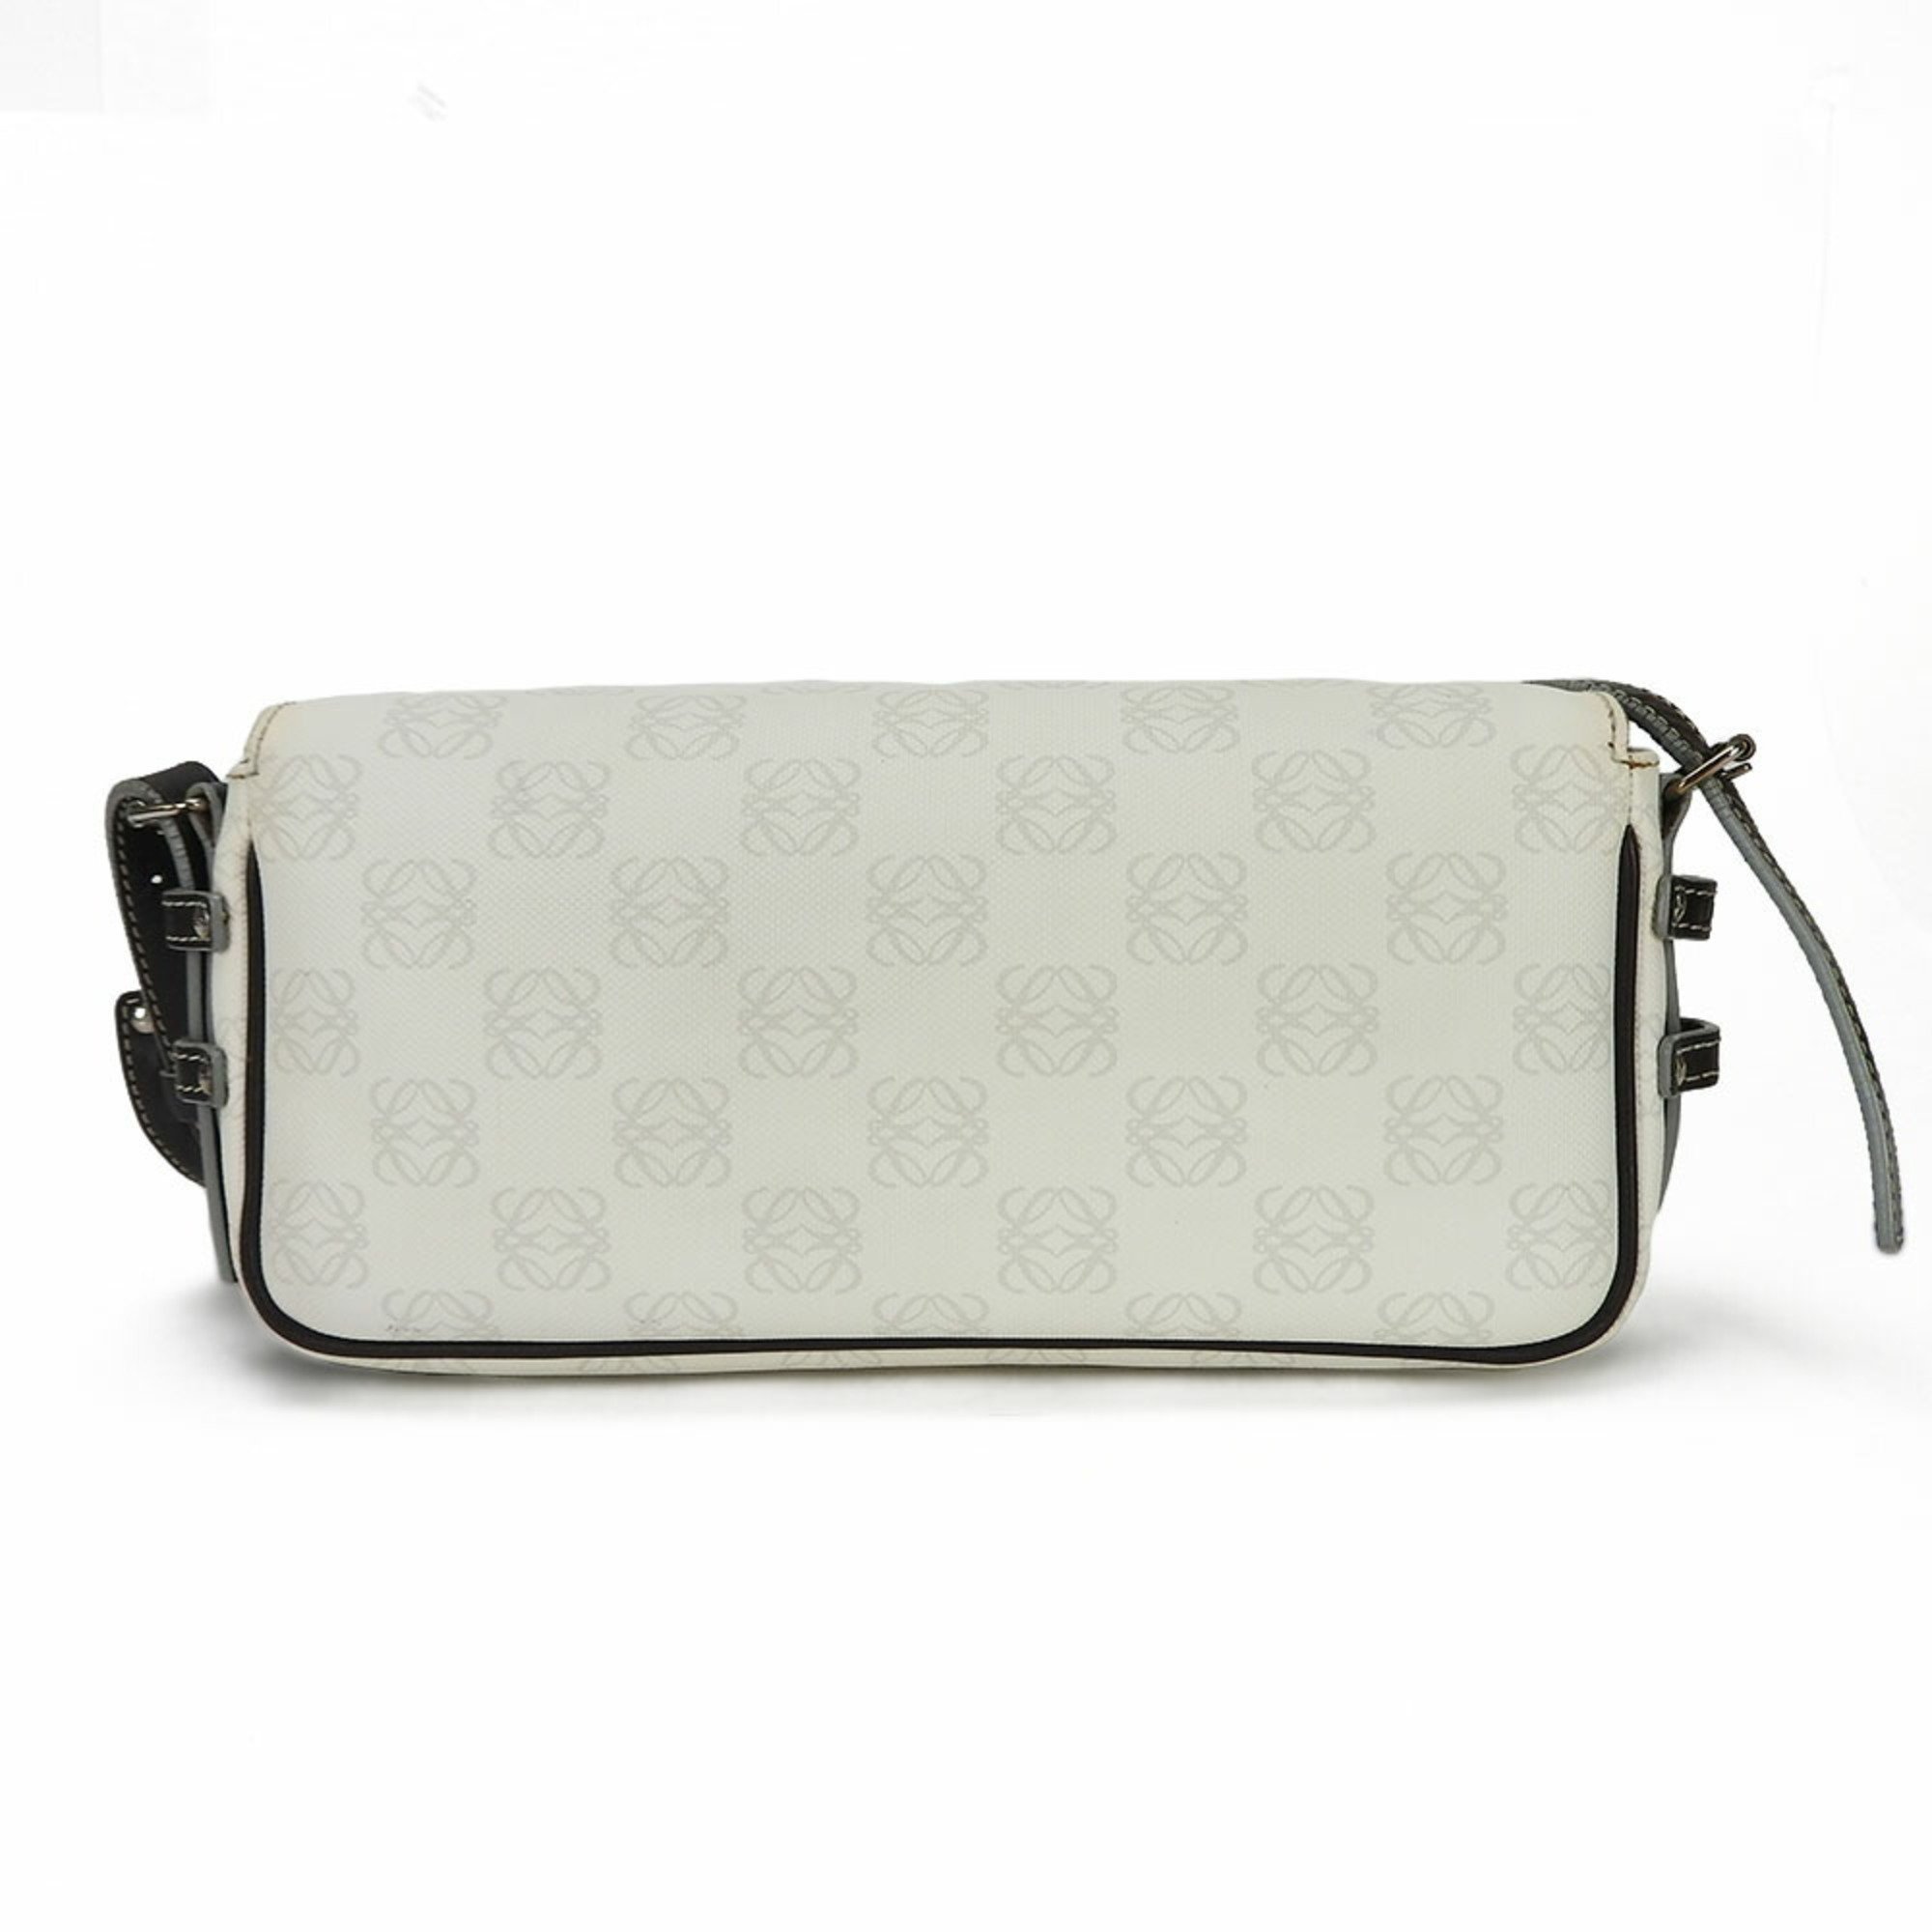 LOEWE One Shoulder Bag Anagram 304.80.004 PVC Leather White Dark Brown Ladies shoulder bag leather white brown